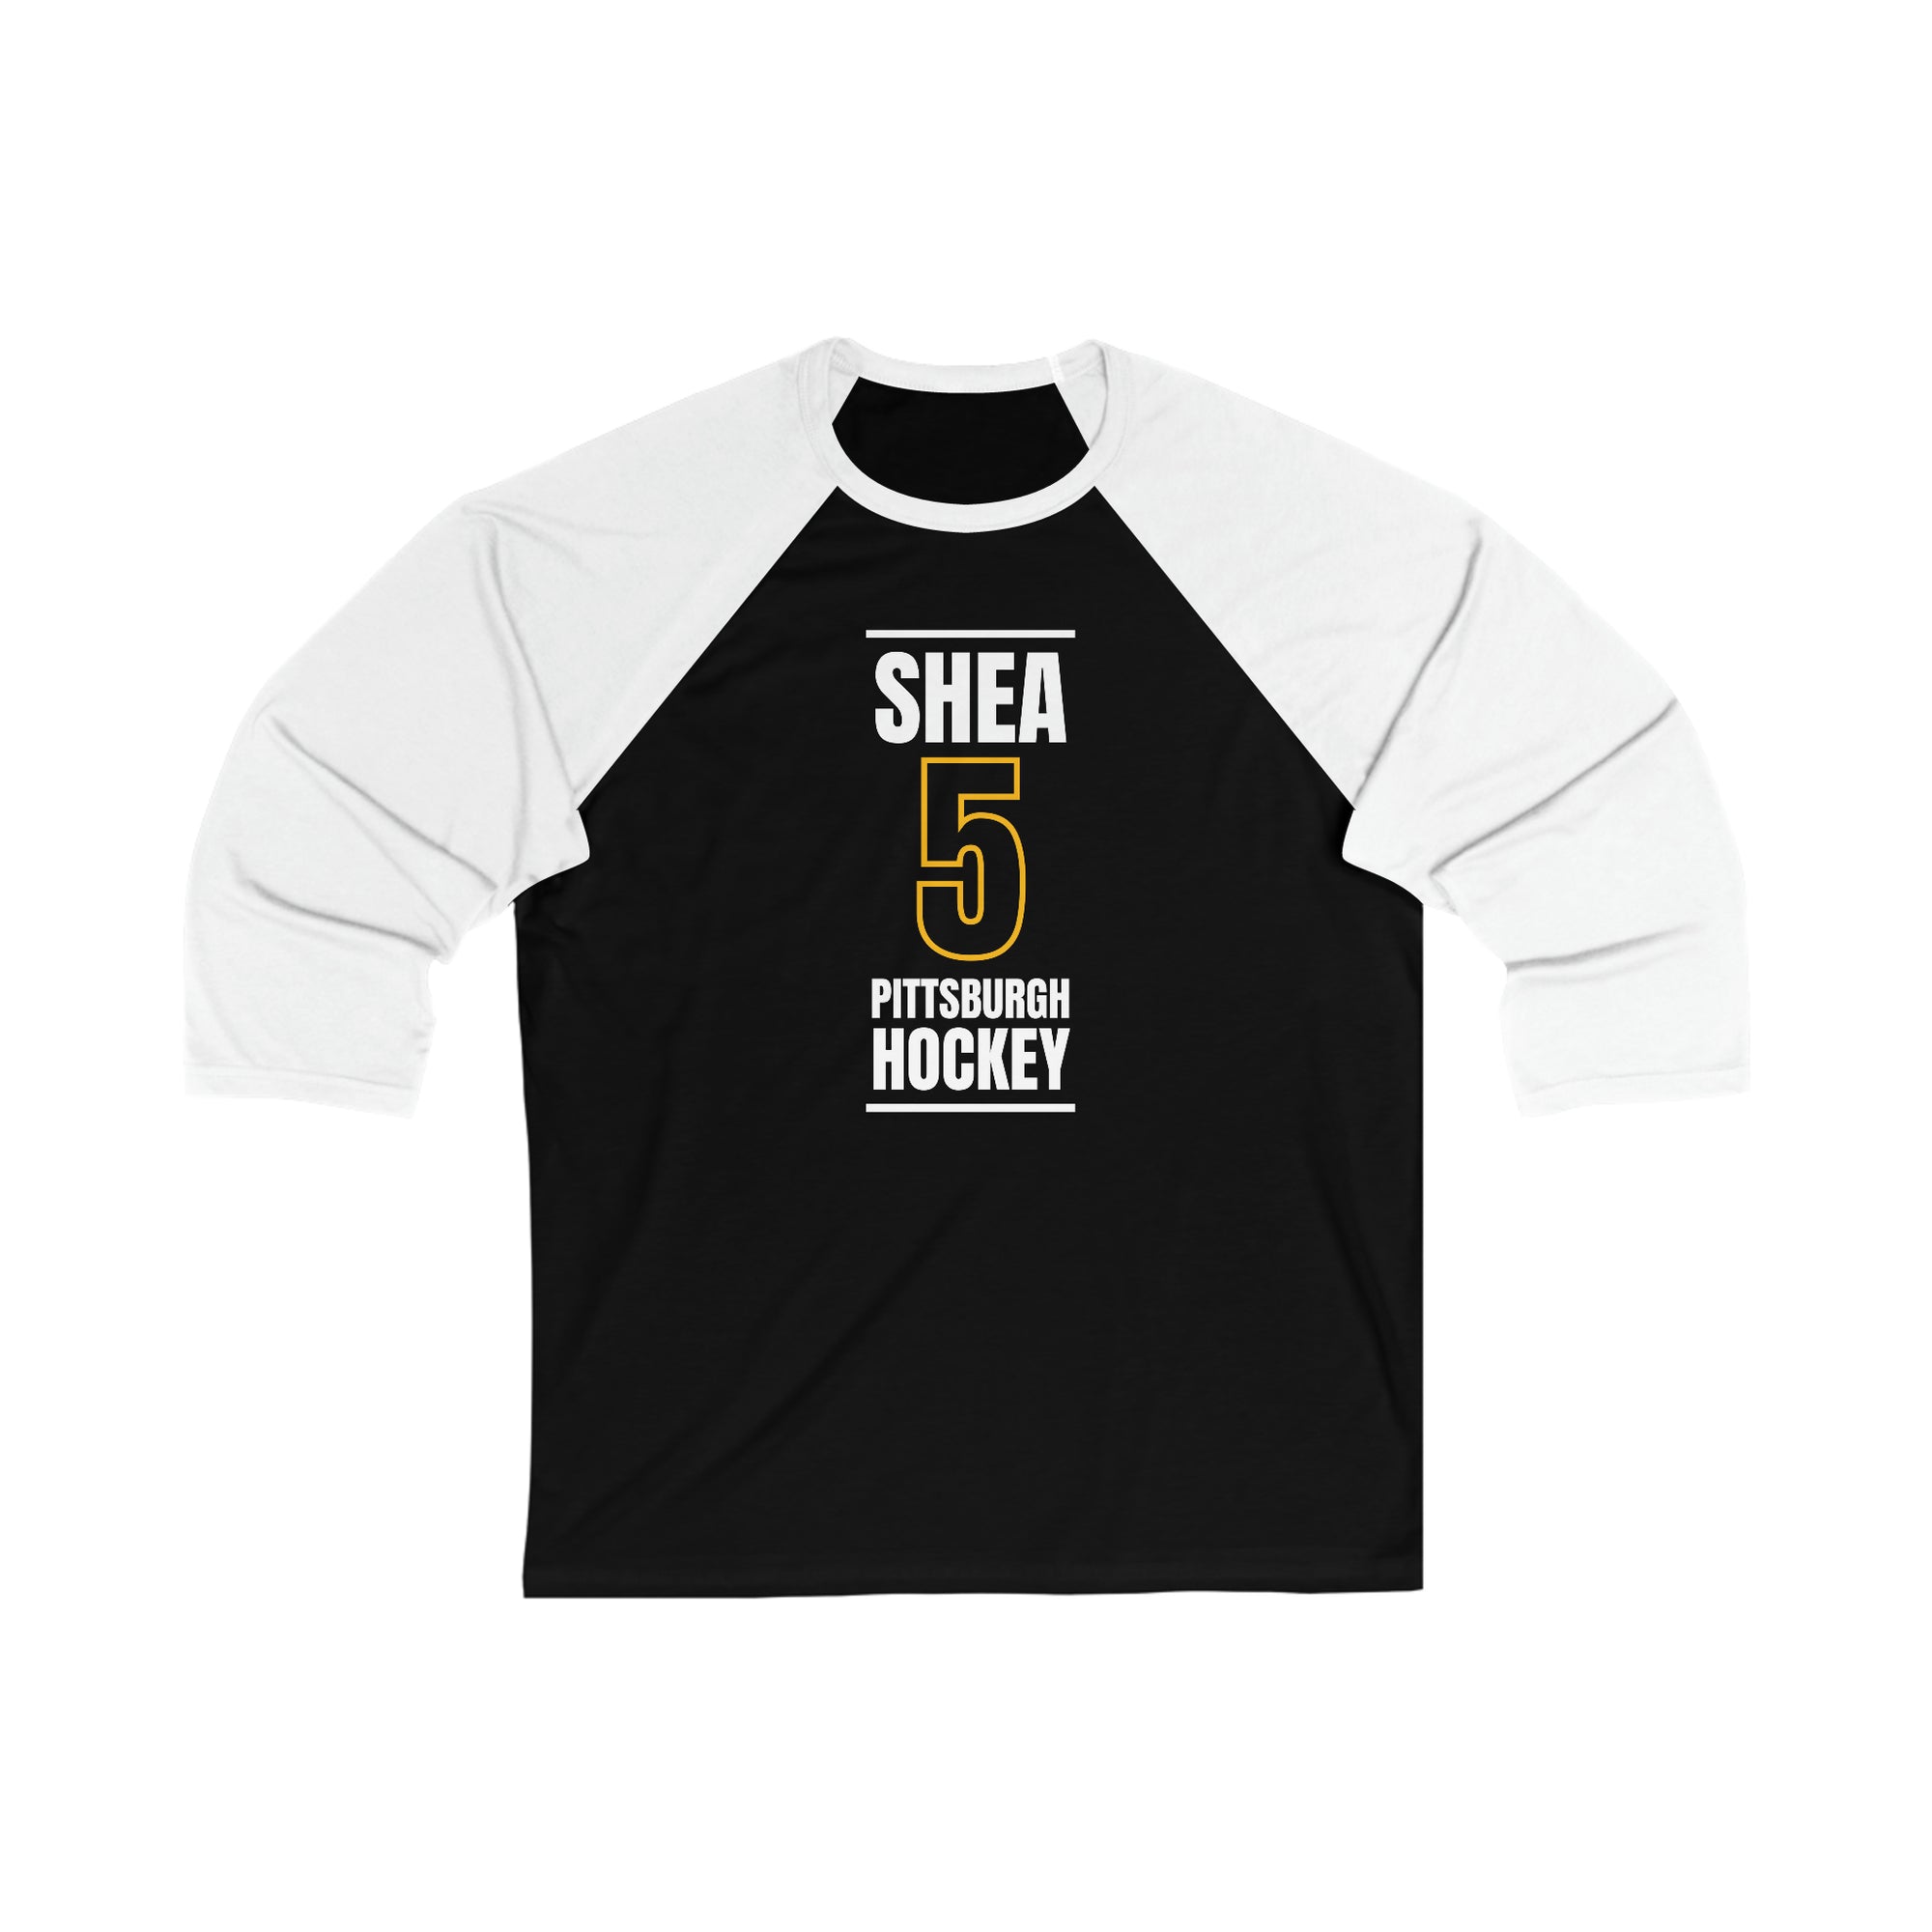 Shea 5 Pittsburgh Hockey Black Vertical Design Unisex Tri-Blend 3/4 Sleeve Raglan Baseball Shirt